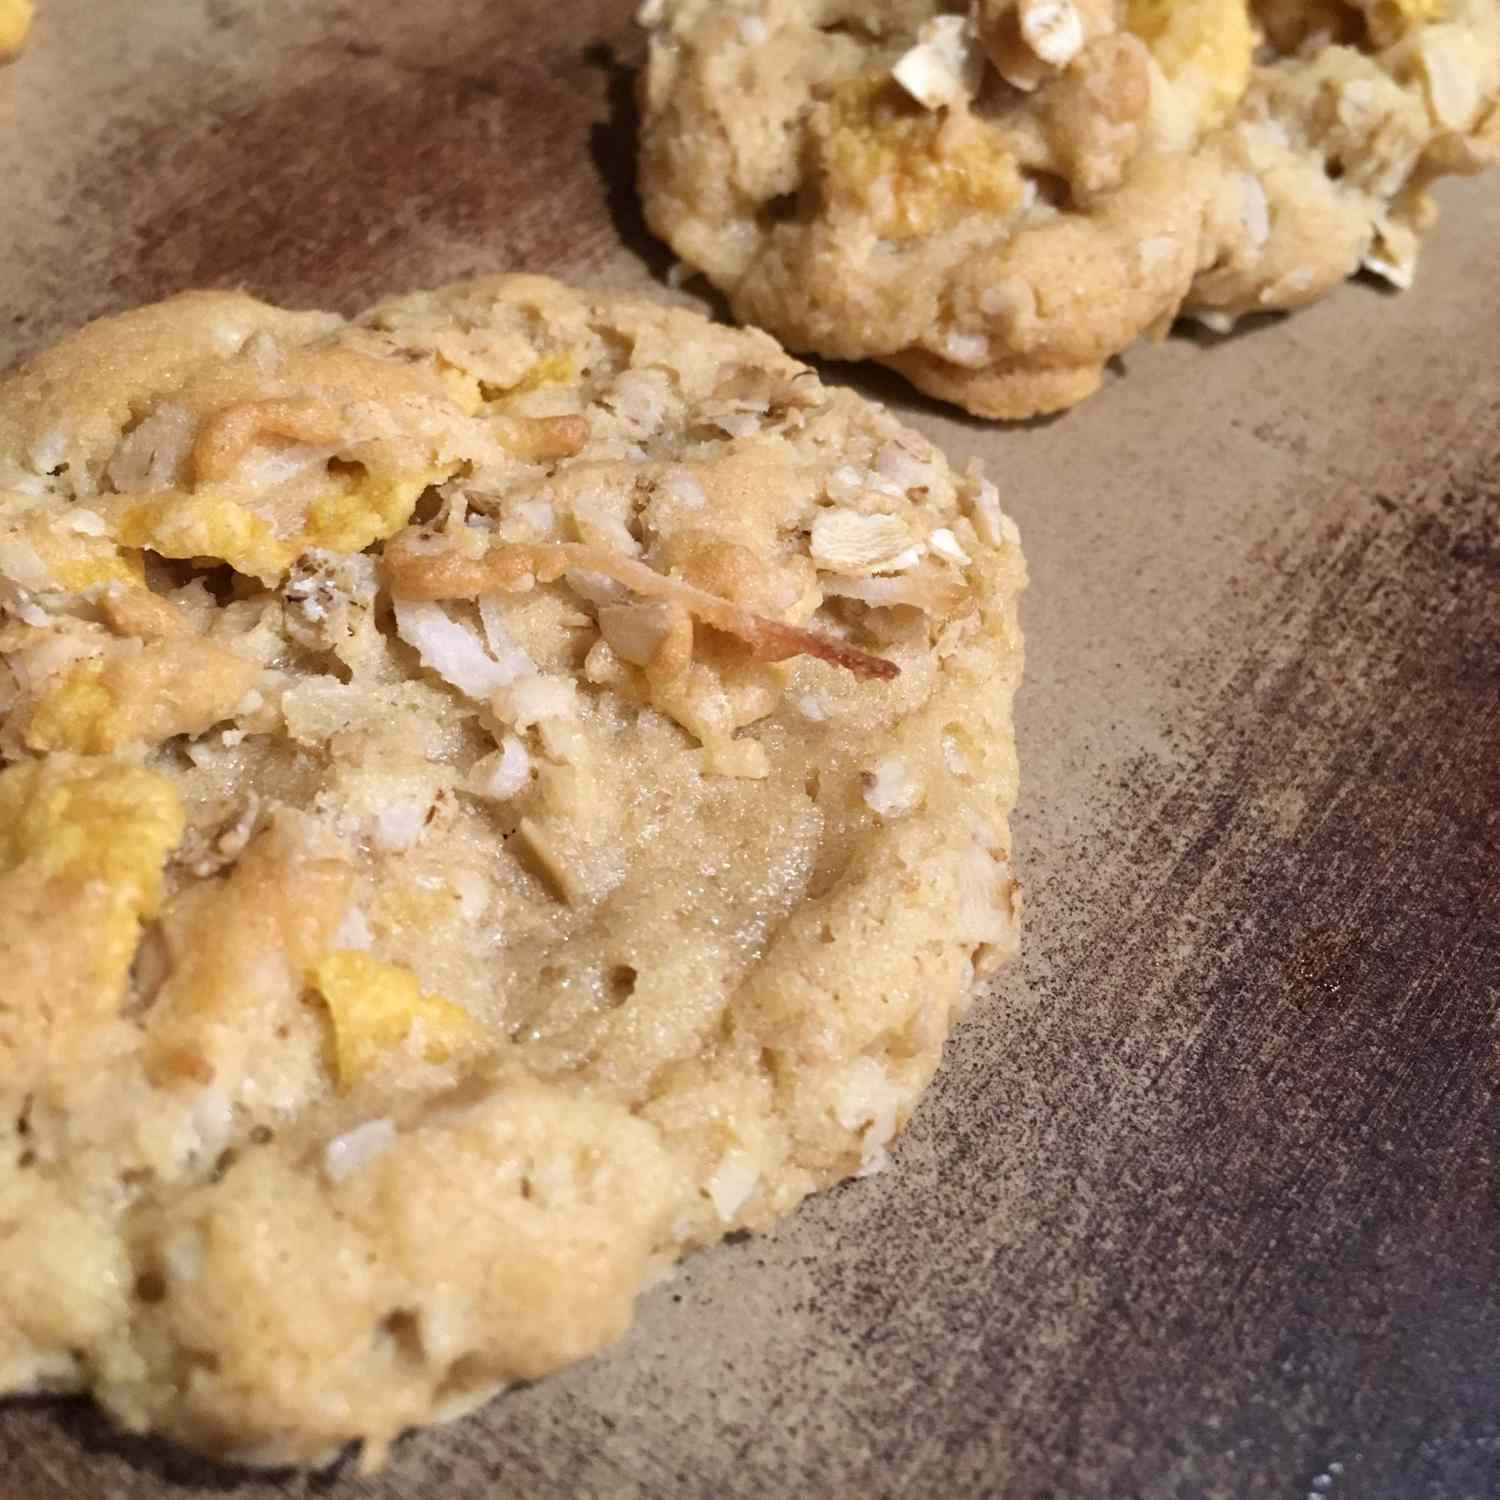 Mom's Ranger Cookies on a baking sheet